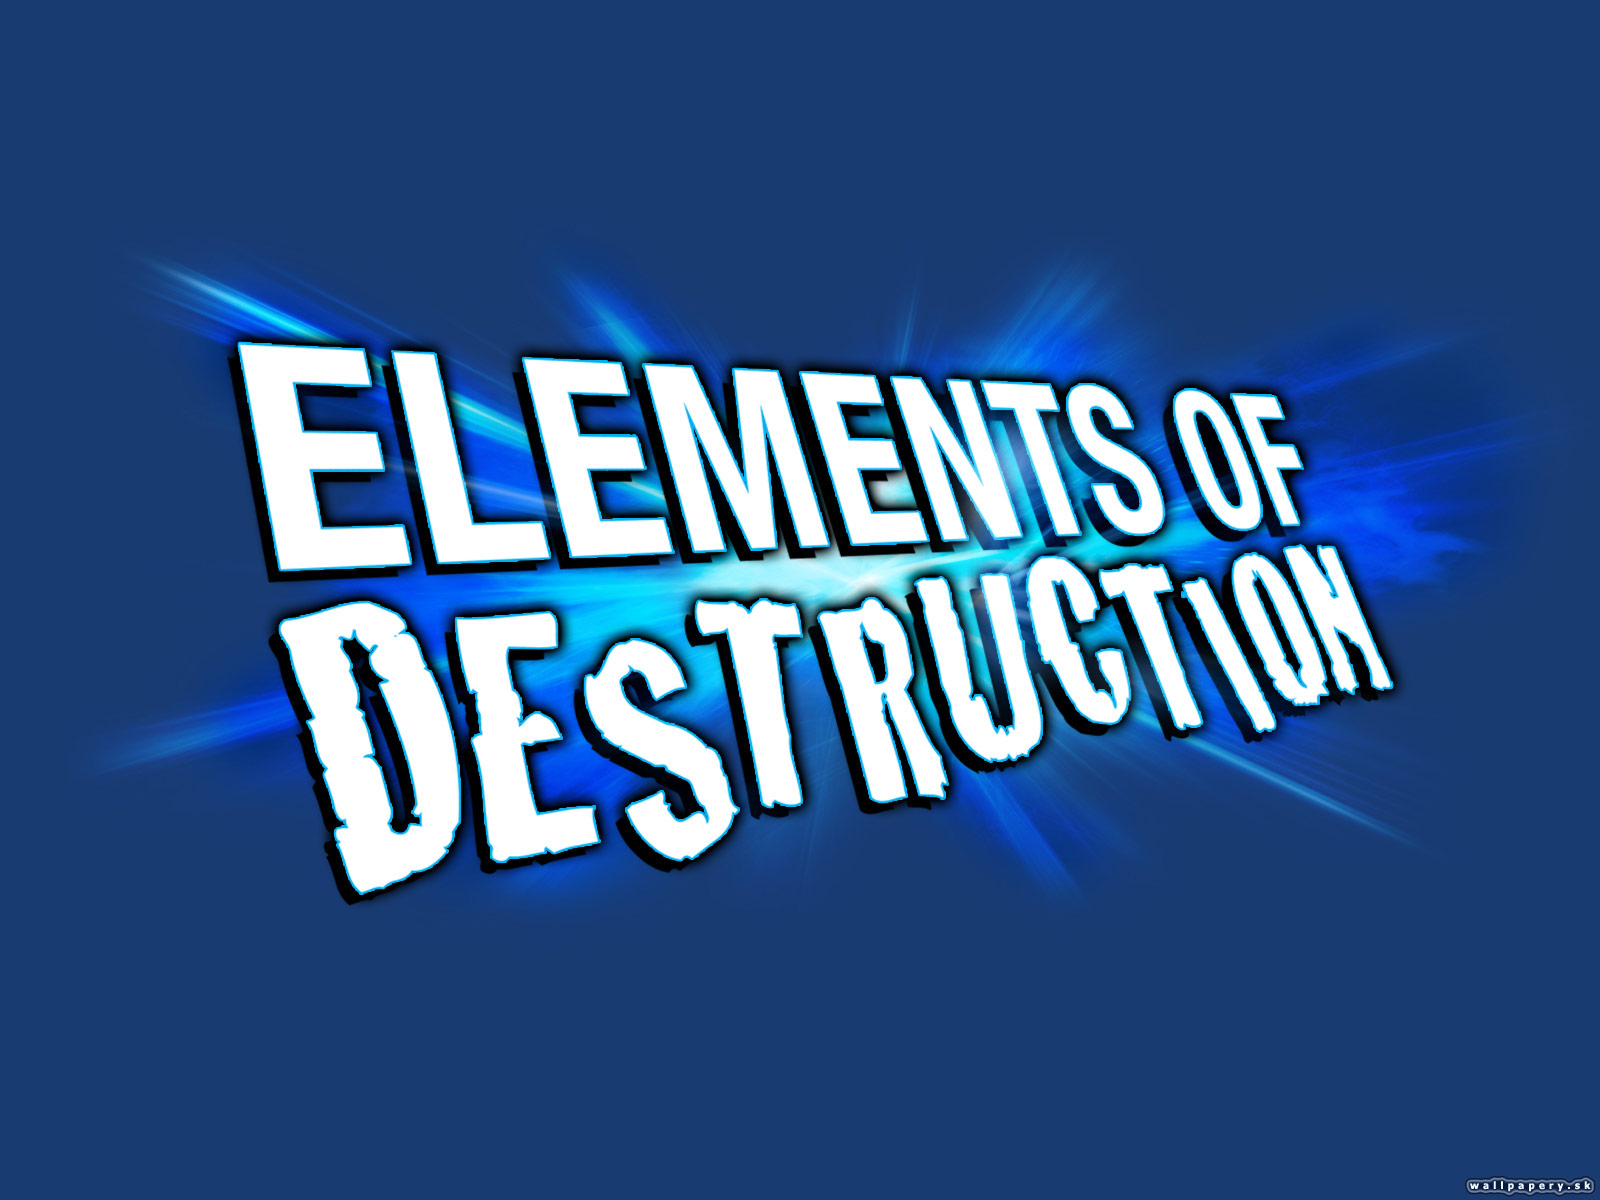 Elements of Destruction - wallpaper 2